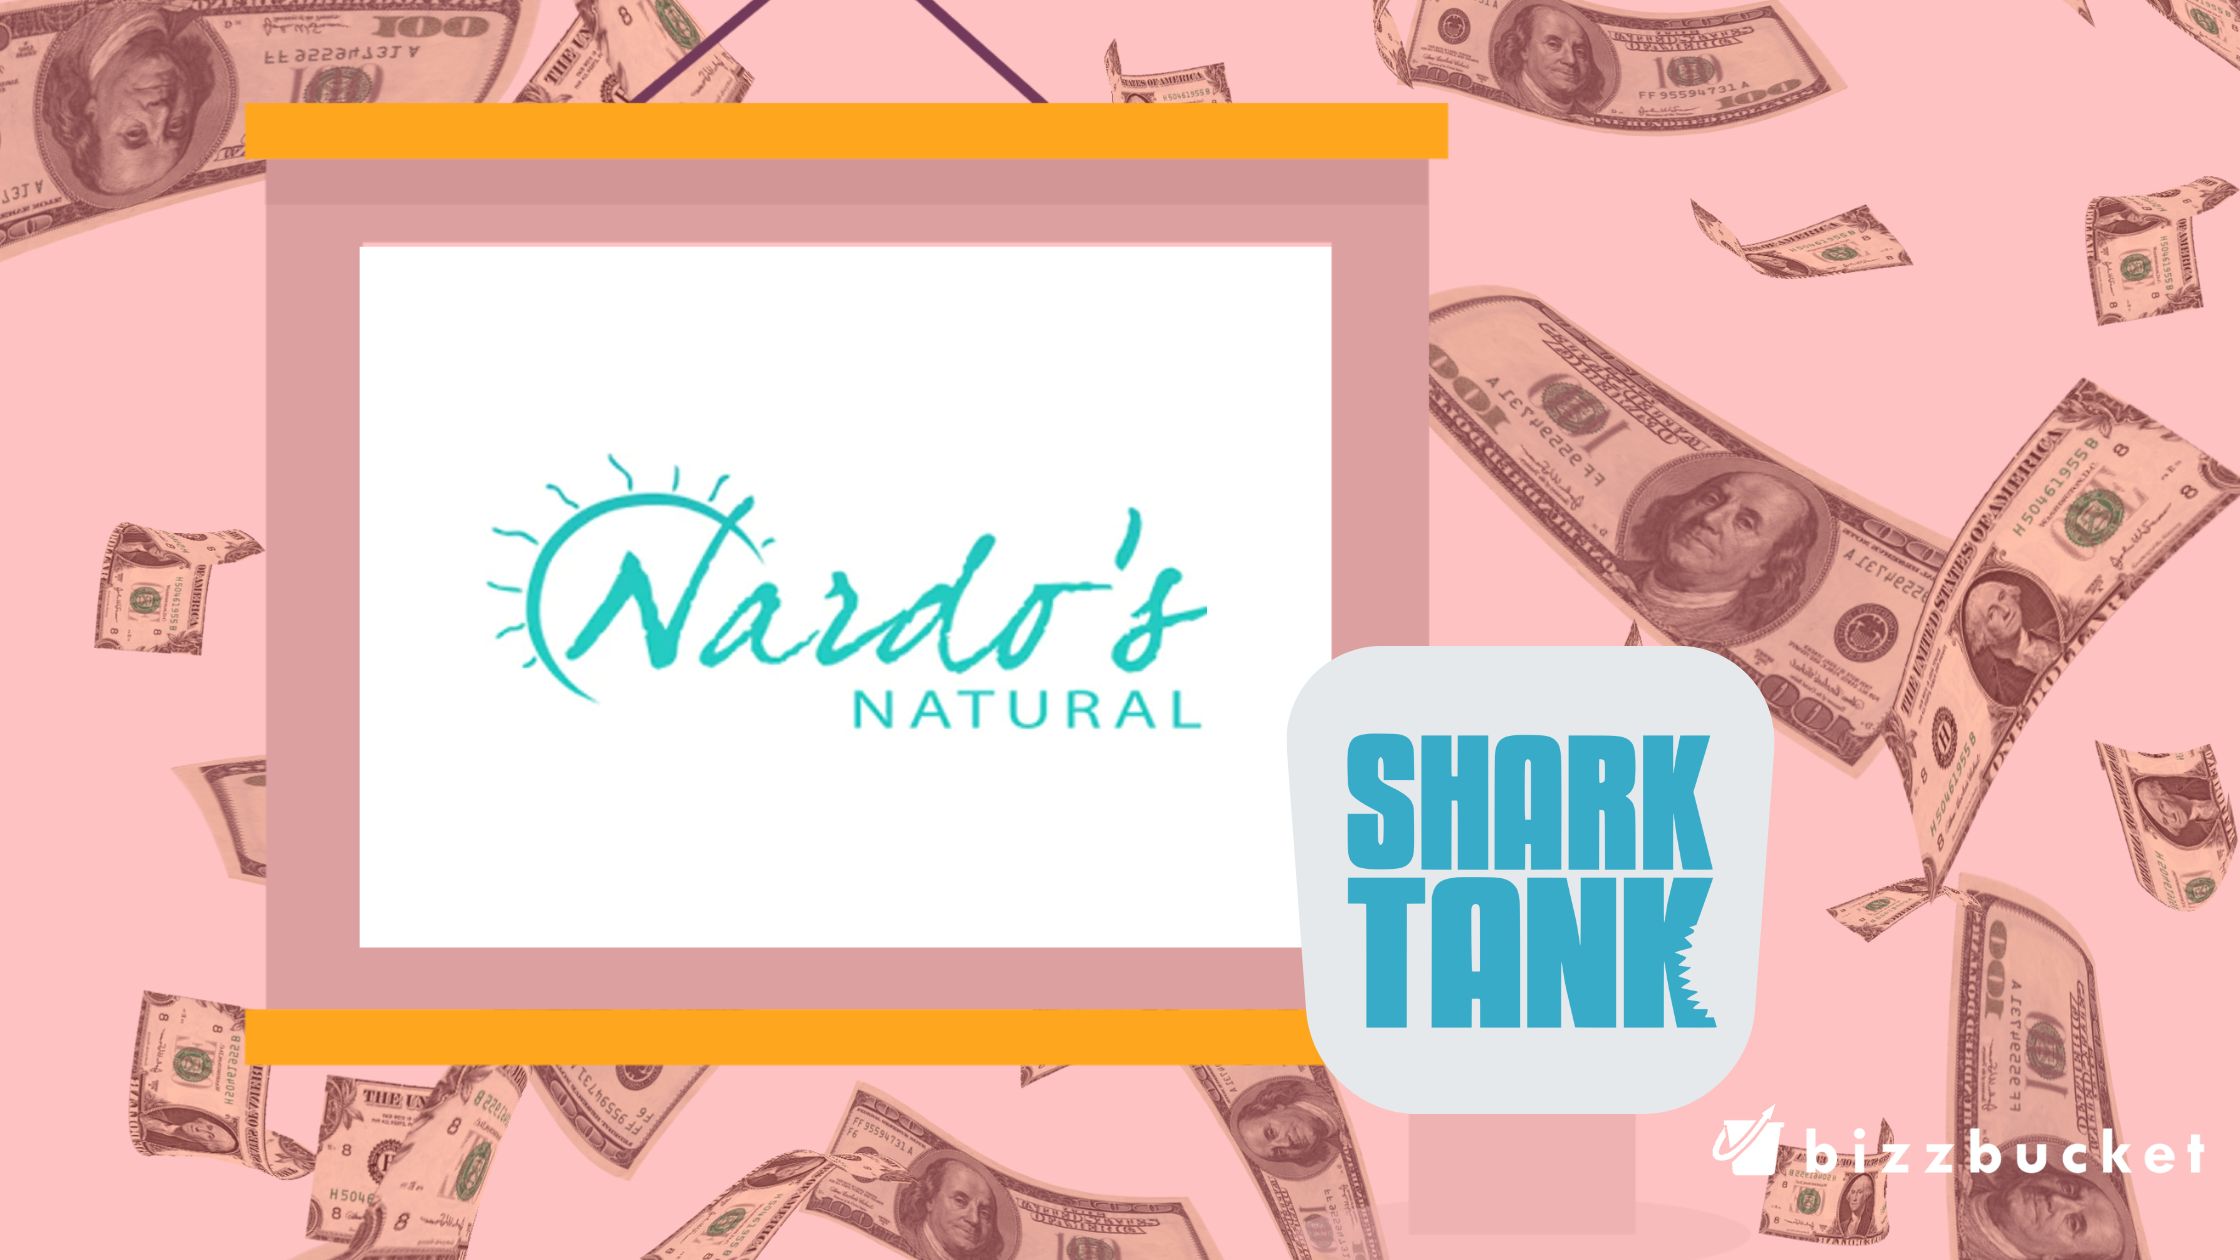 Nardo's Natural shark tank update